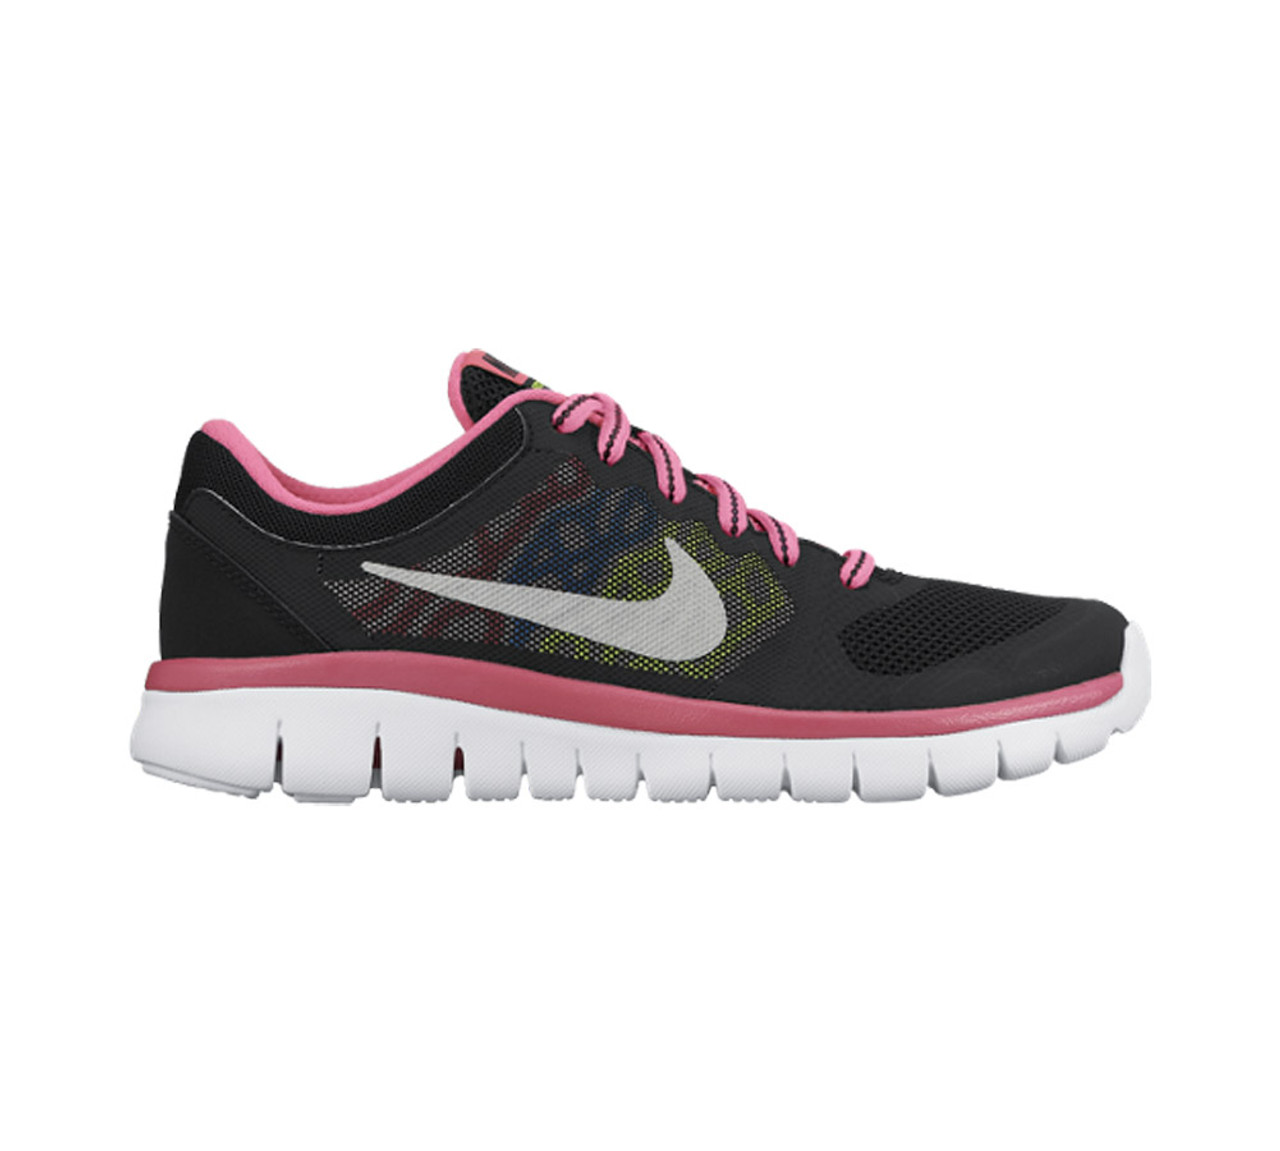 Nike Girl's Flex Run 2015 Athletic Shoe - Black | Discount Nike Athletic & More Shoolu.com |